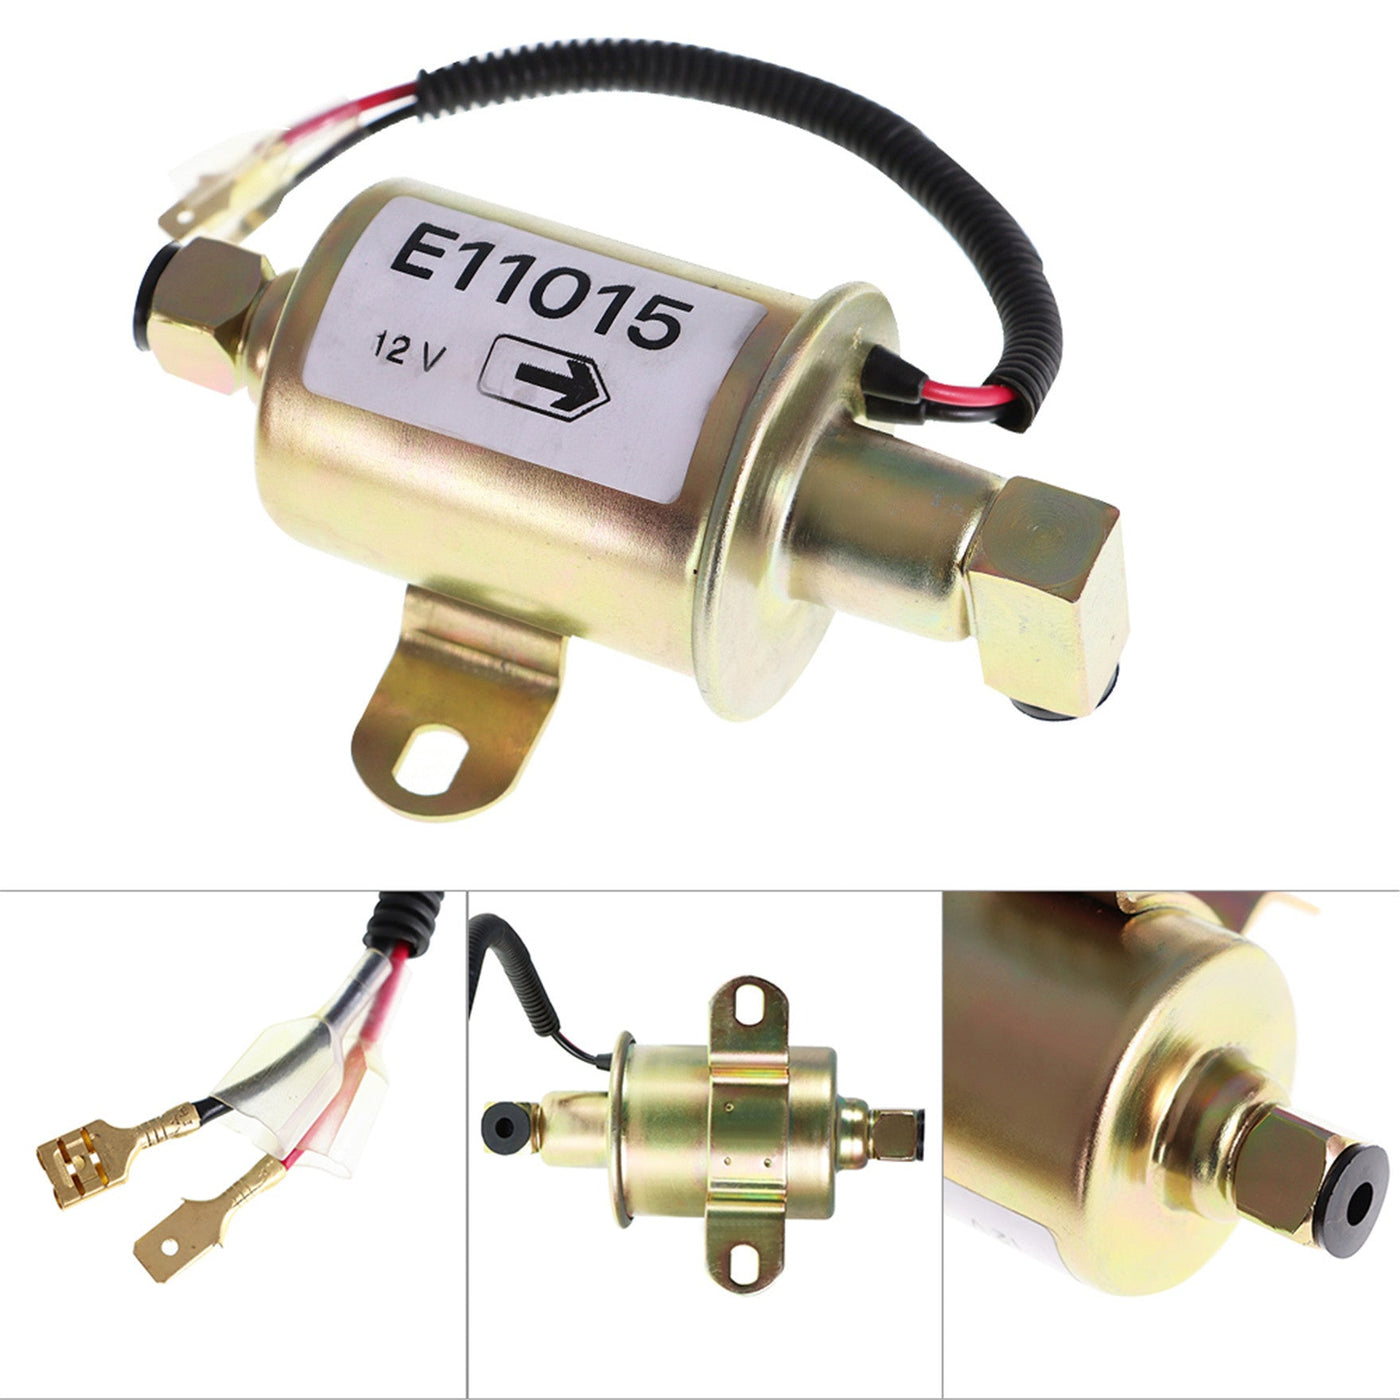 Electrical Fuel Pump 149-2620 A029F887 A047N929 for Onan Cummins E11015